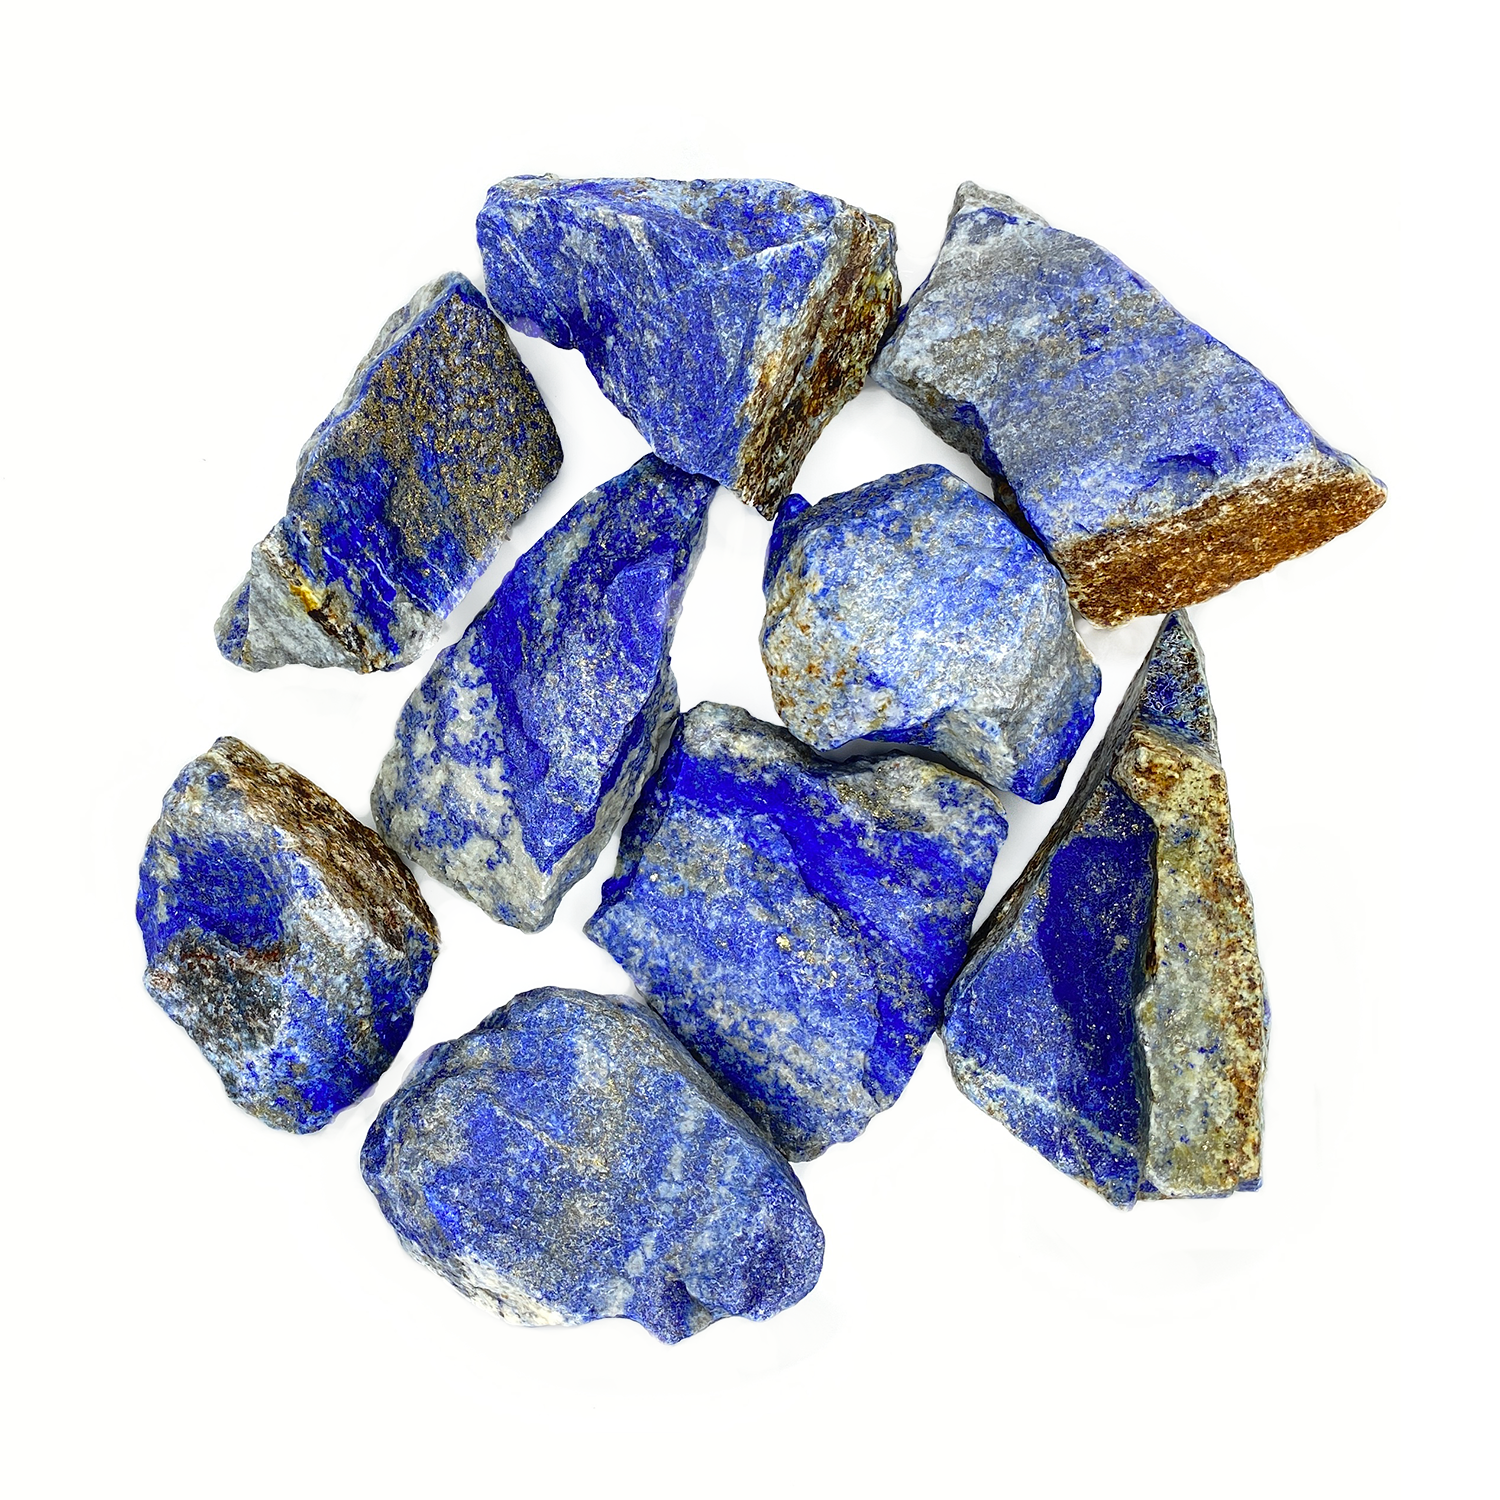 Bulk Rough Stone - XLarge - Blue Lapis Lazuli from Afghanistan